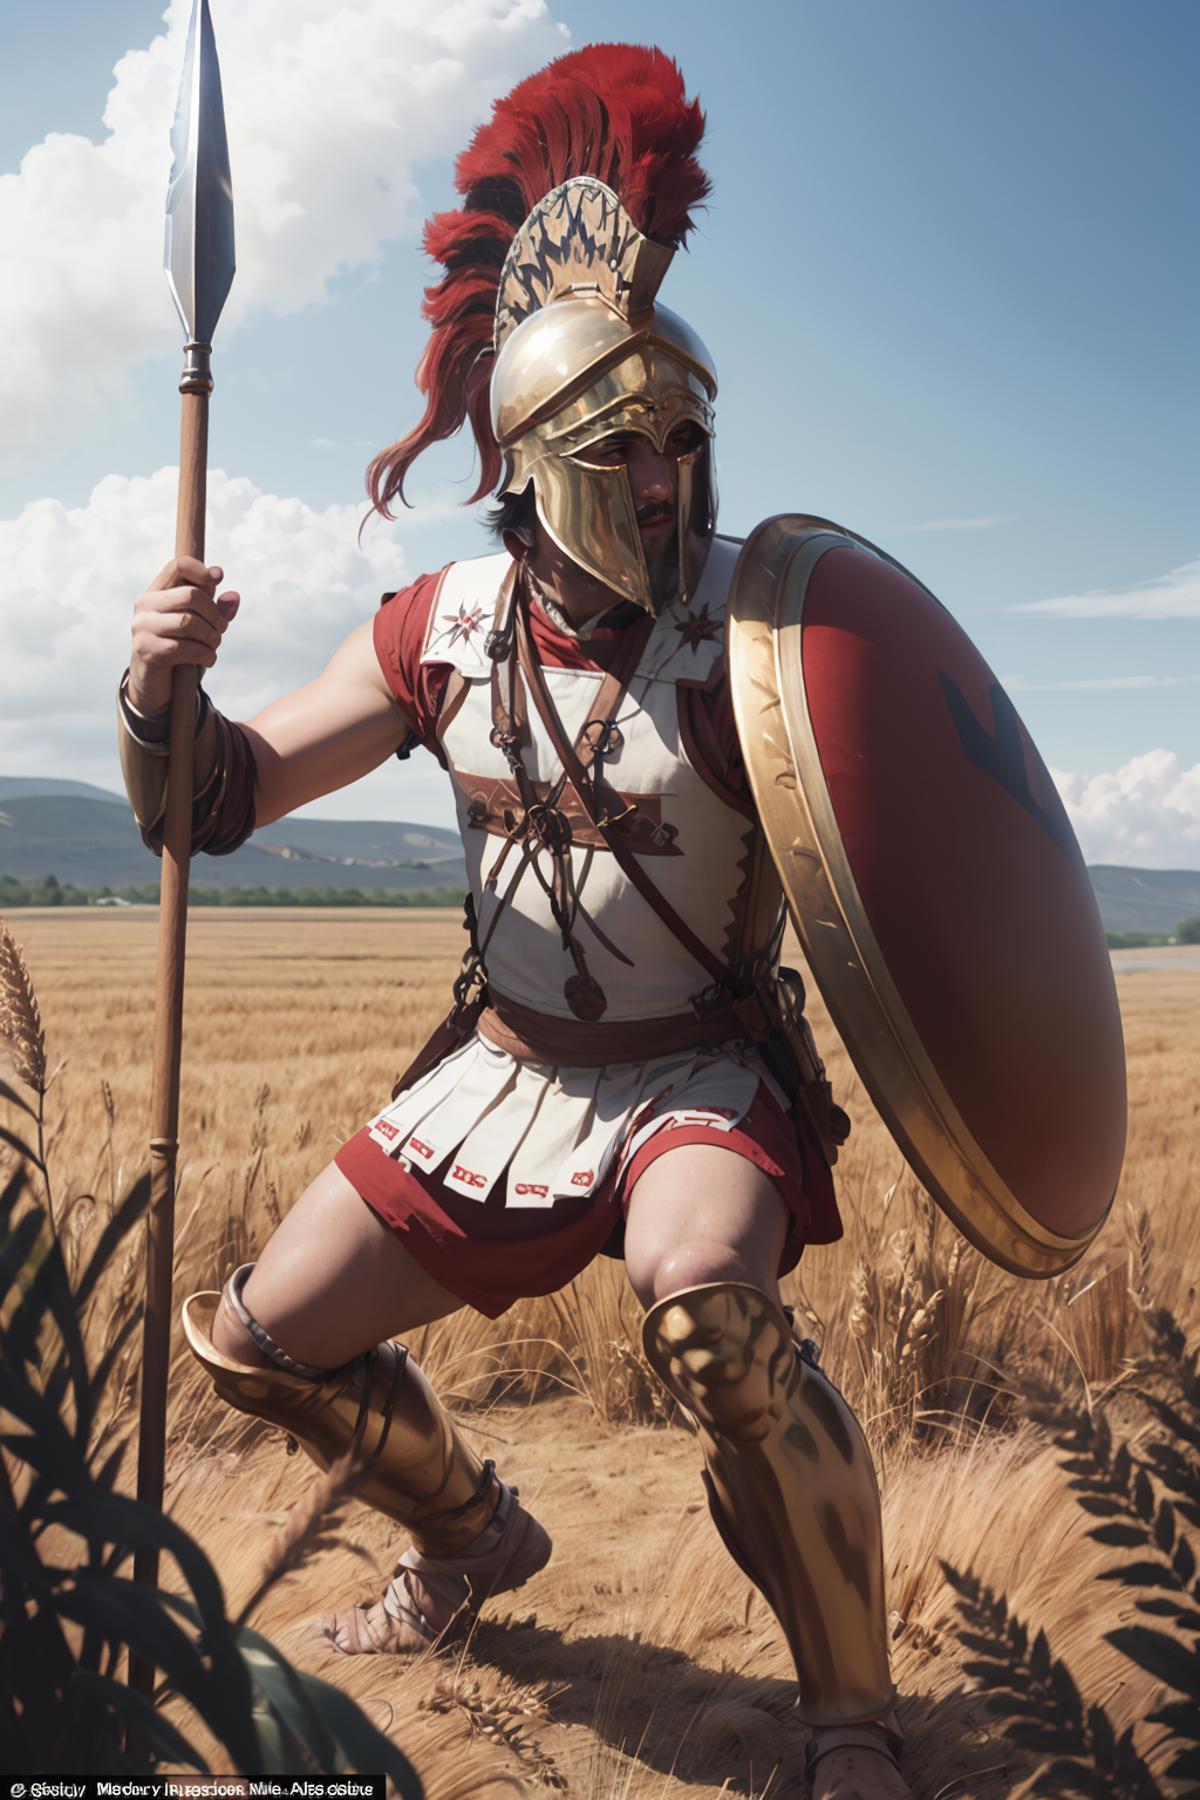 A Warrior in Roman Armor Standing in a Field